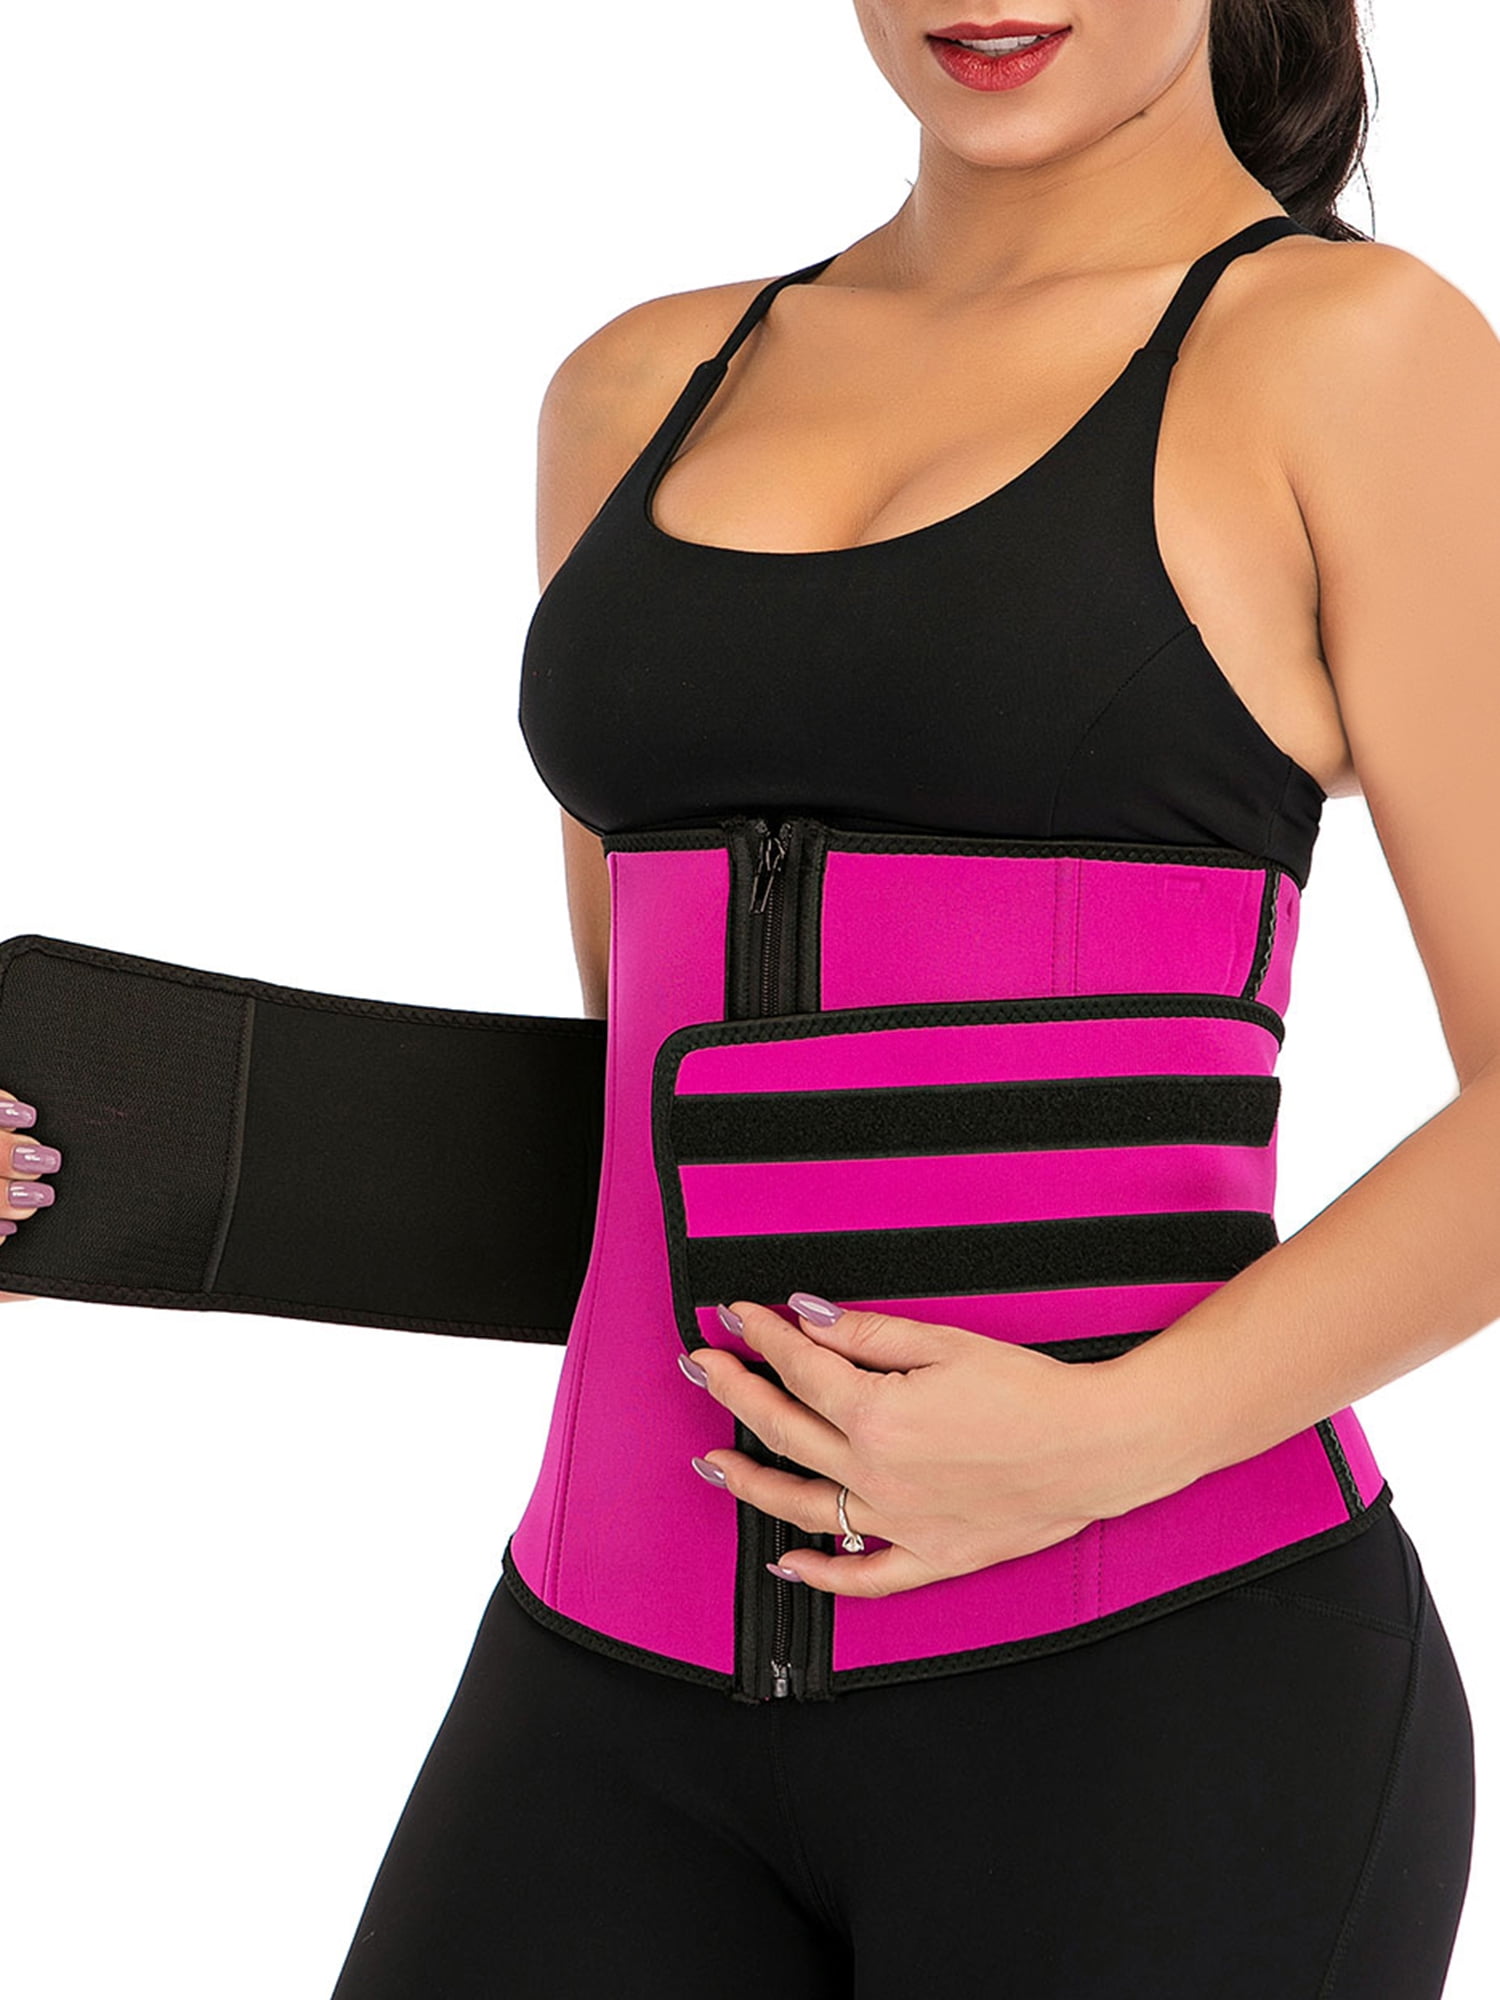 Details about   Women Waist Trainer Body Shaper Tummy Control Training Underbust Corset Cincher 